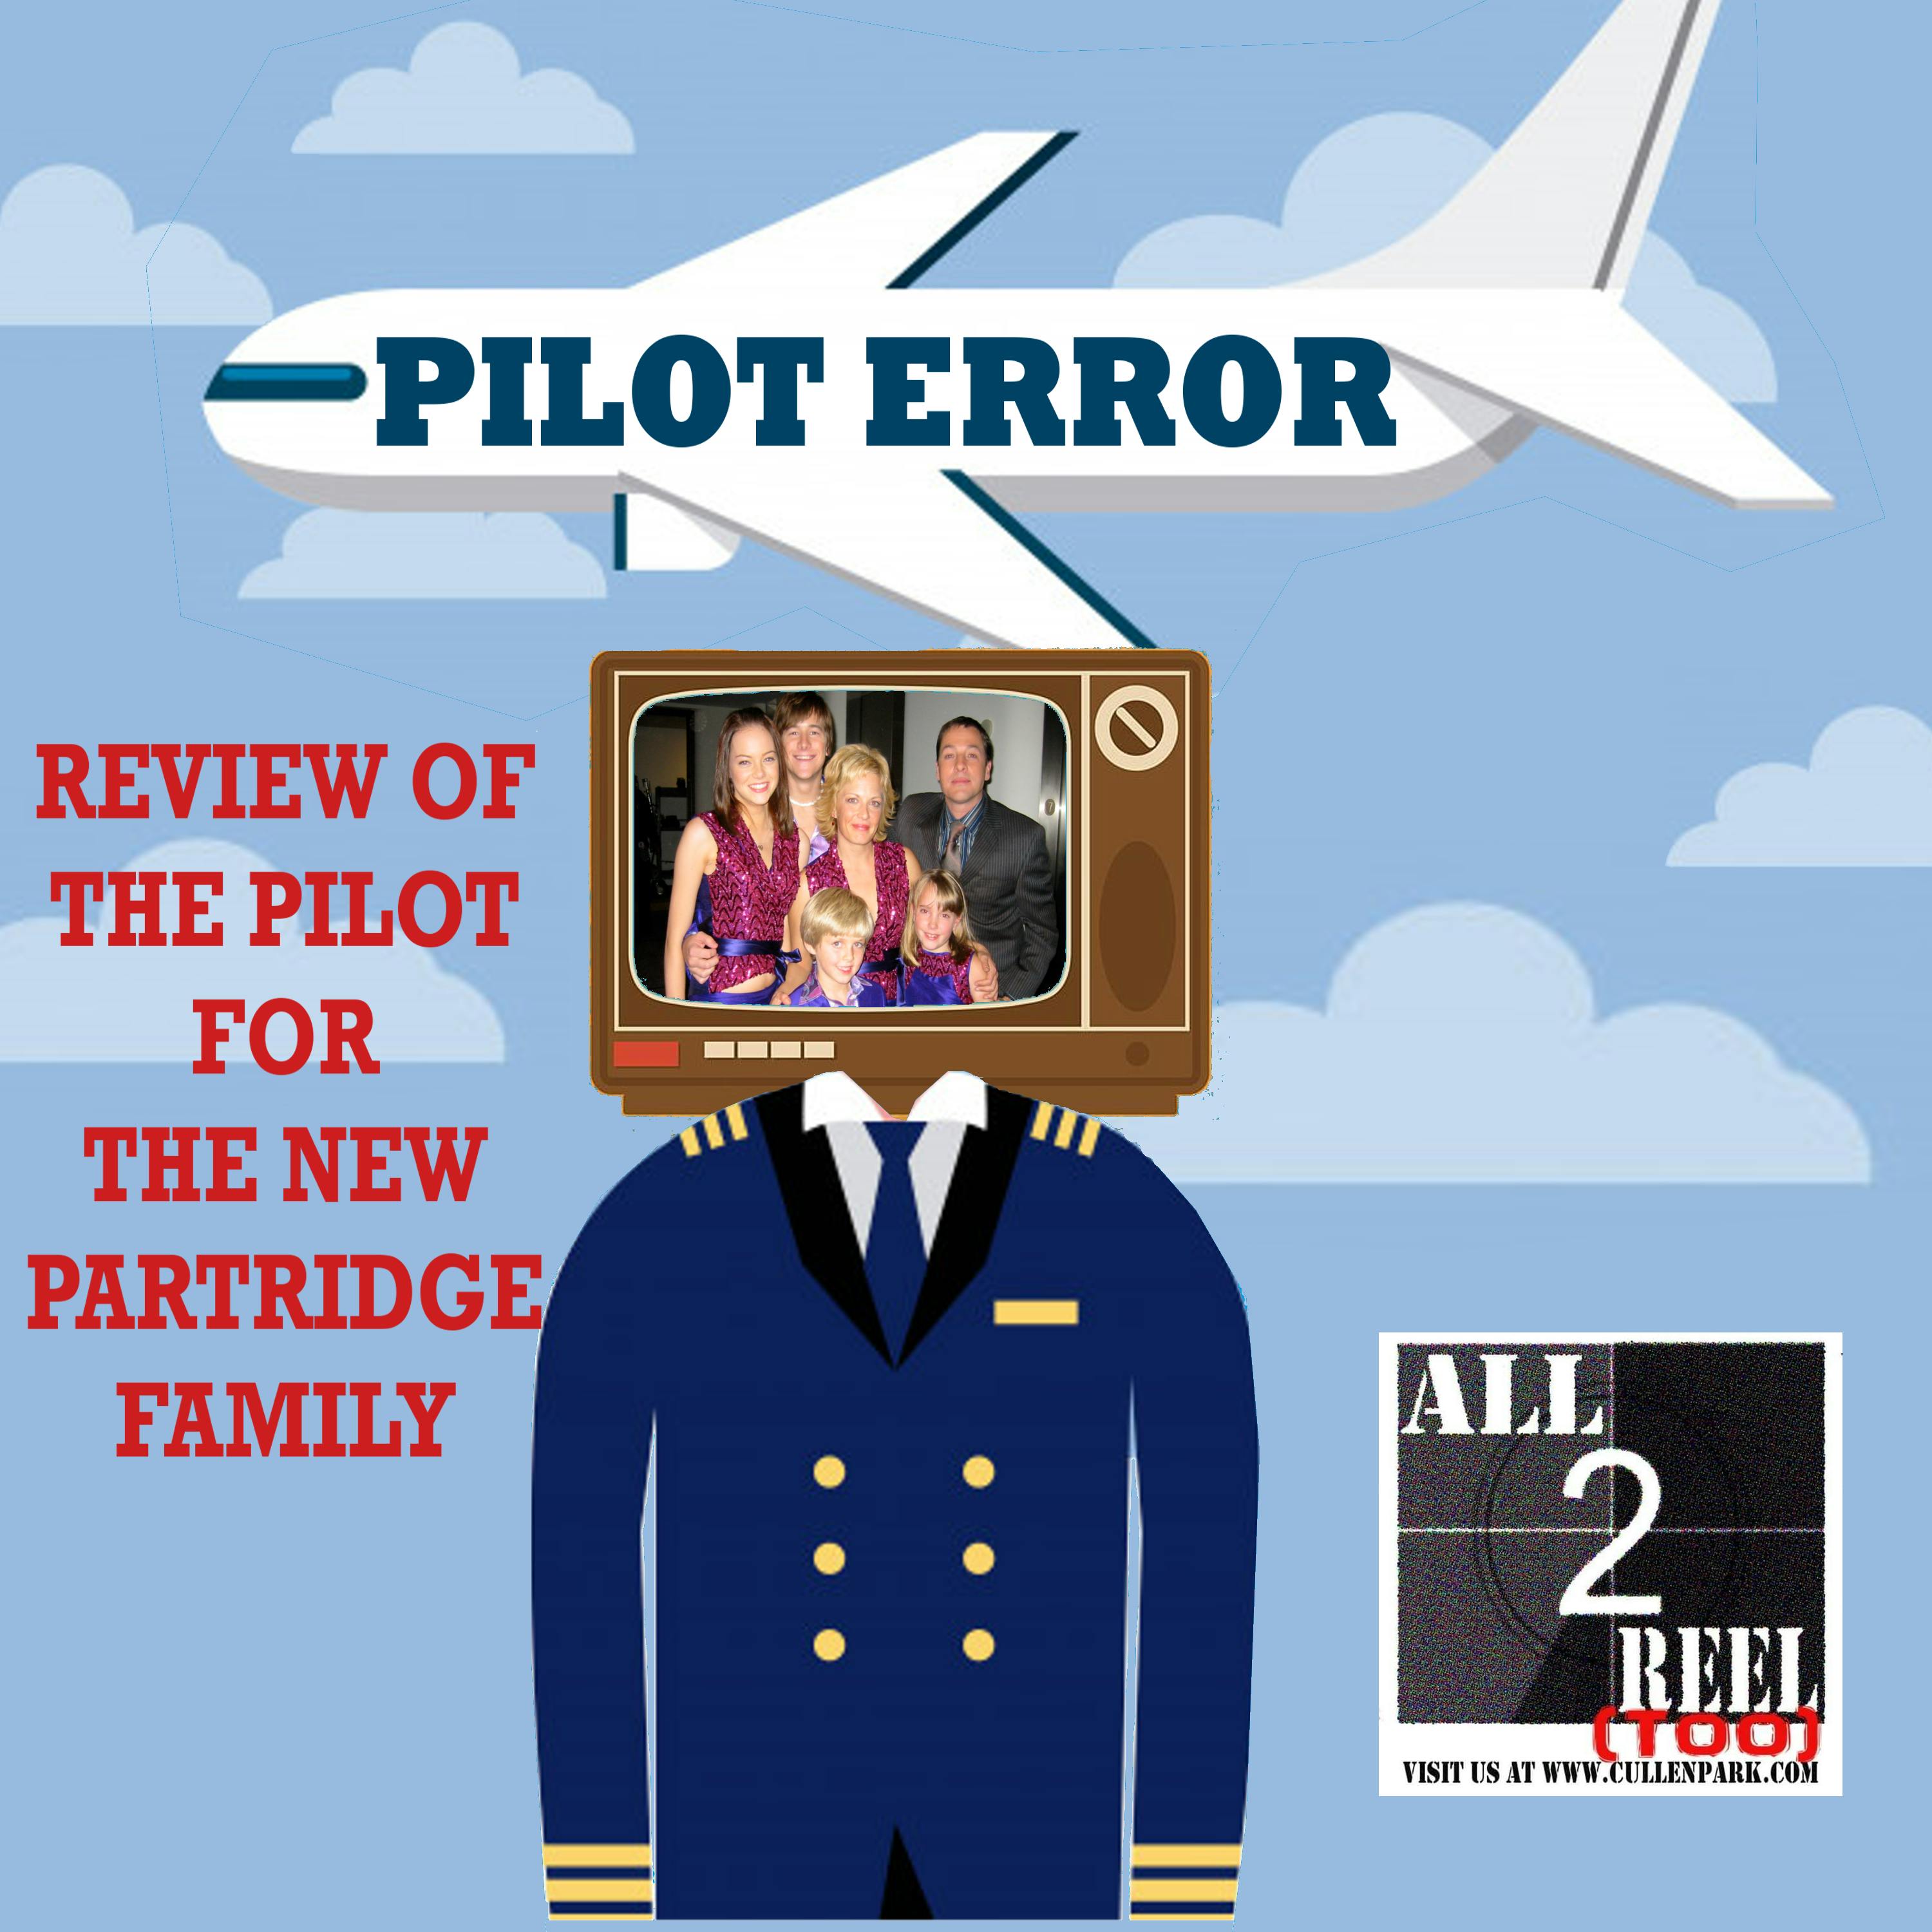 The New Partridge Family  - PILOT ERROR REVIEW